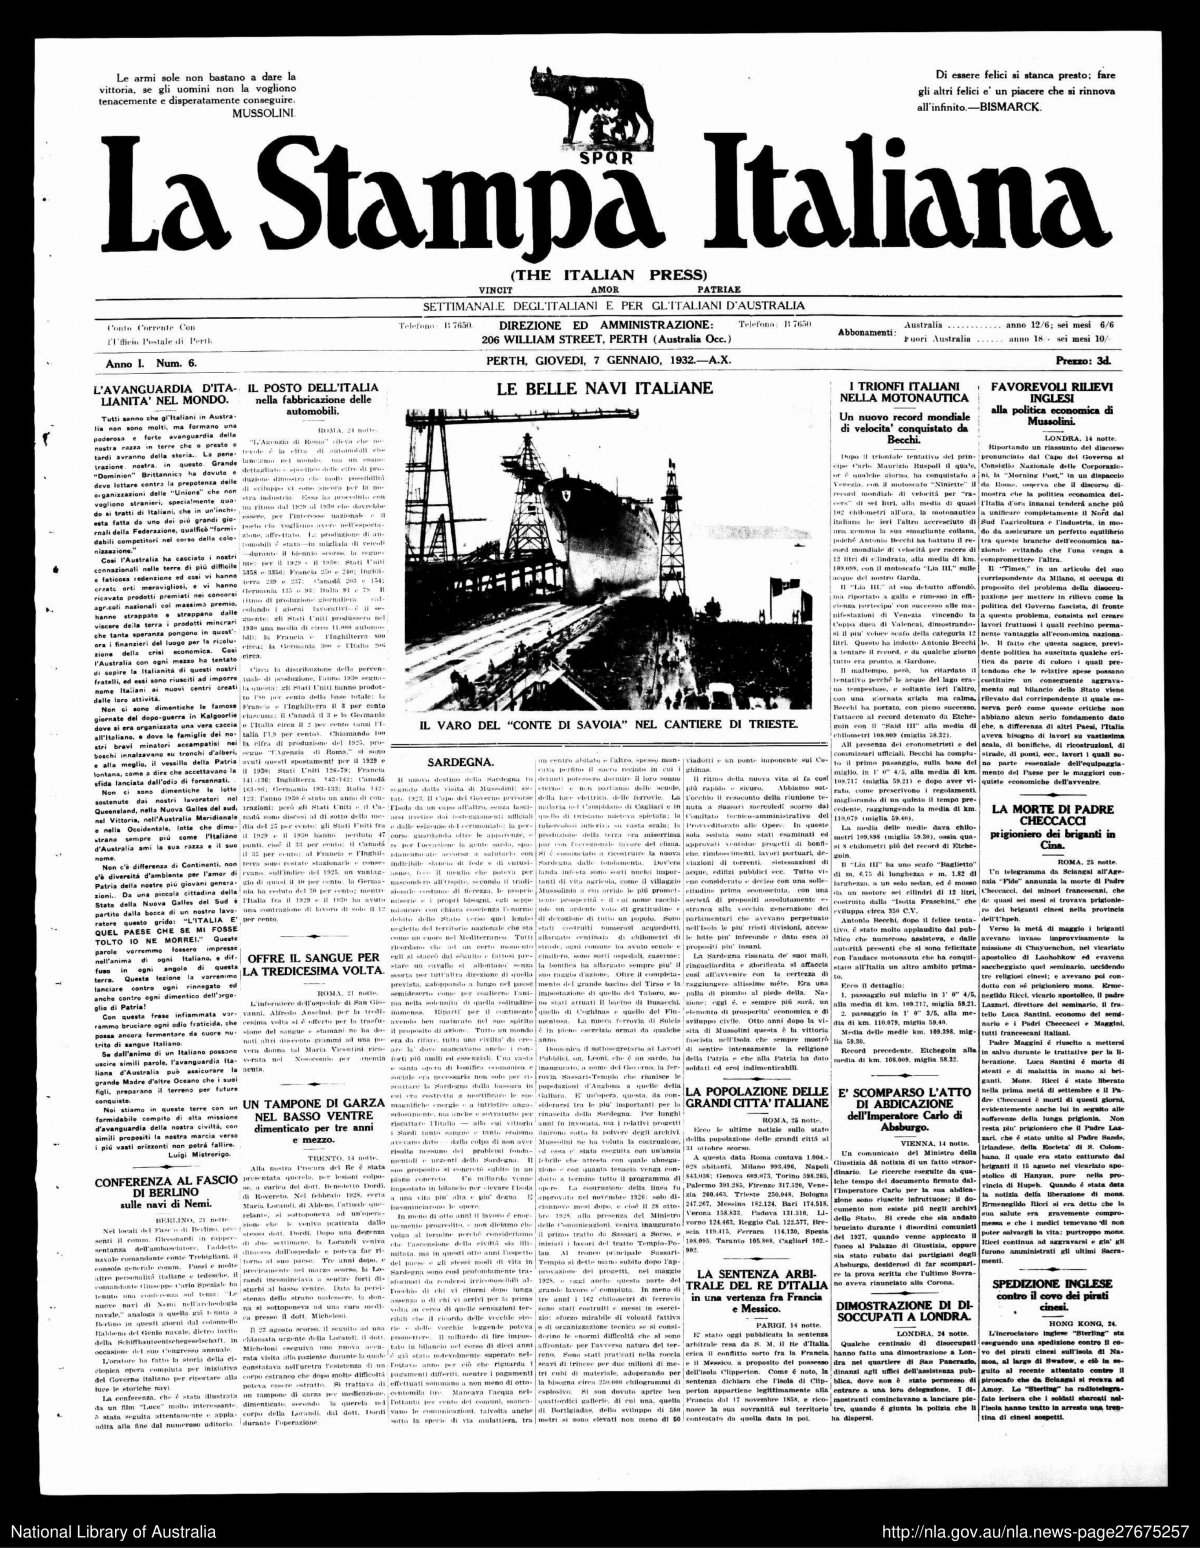 A photo of The Italian Press, 1932.